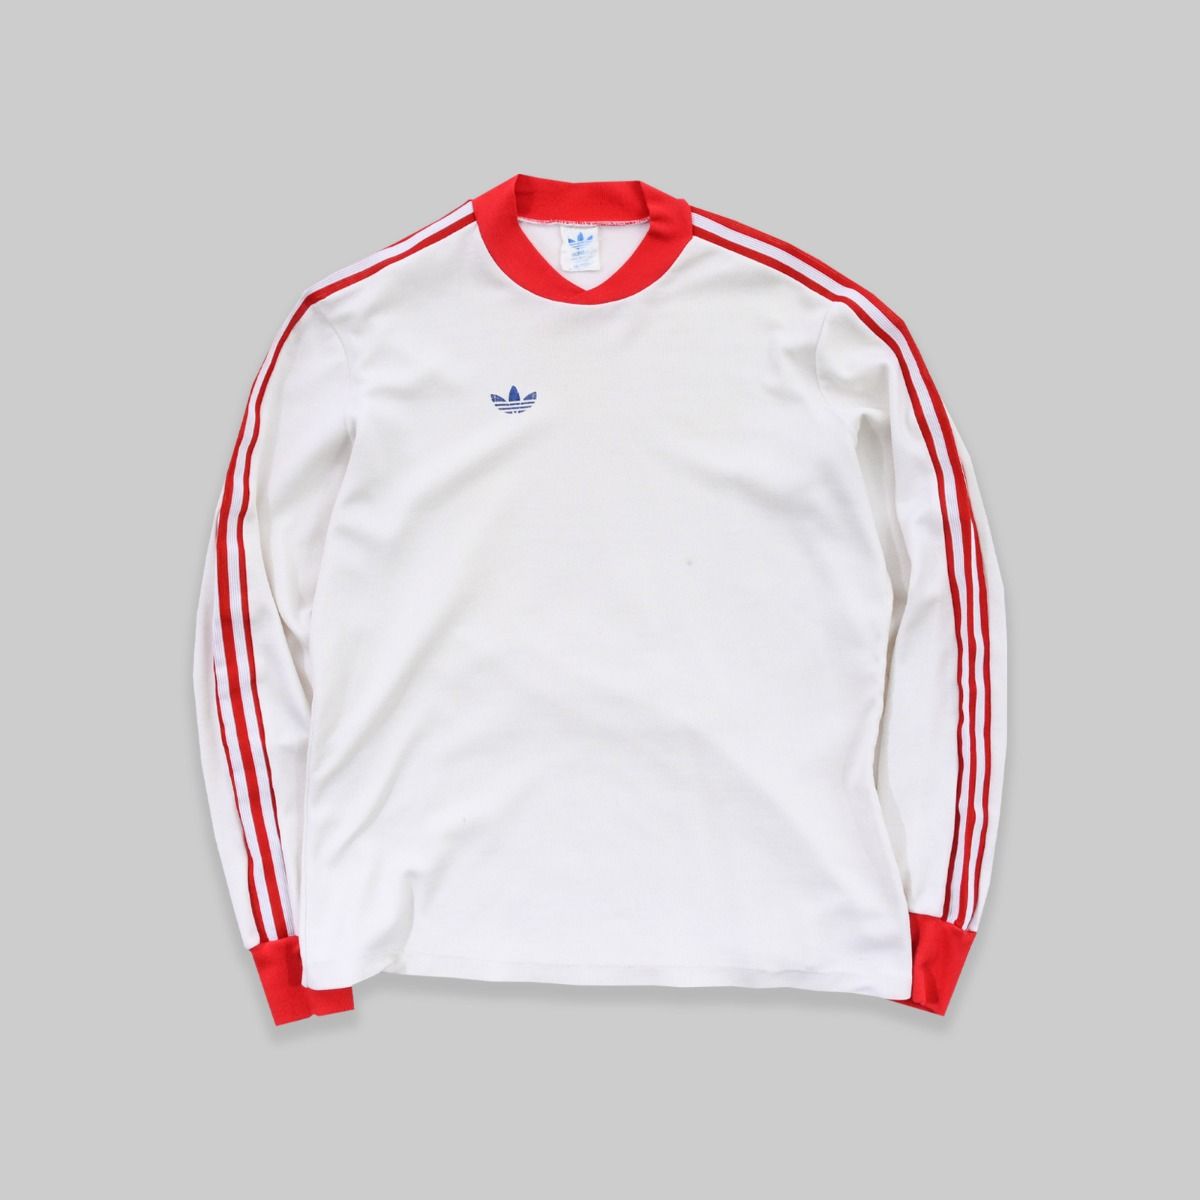 Adidas 1980s Long Sleeve Top